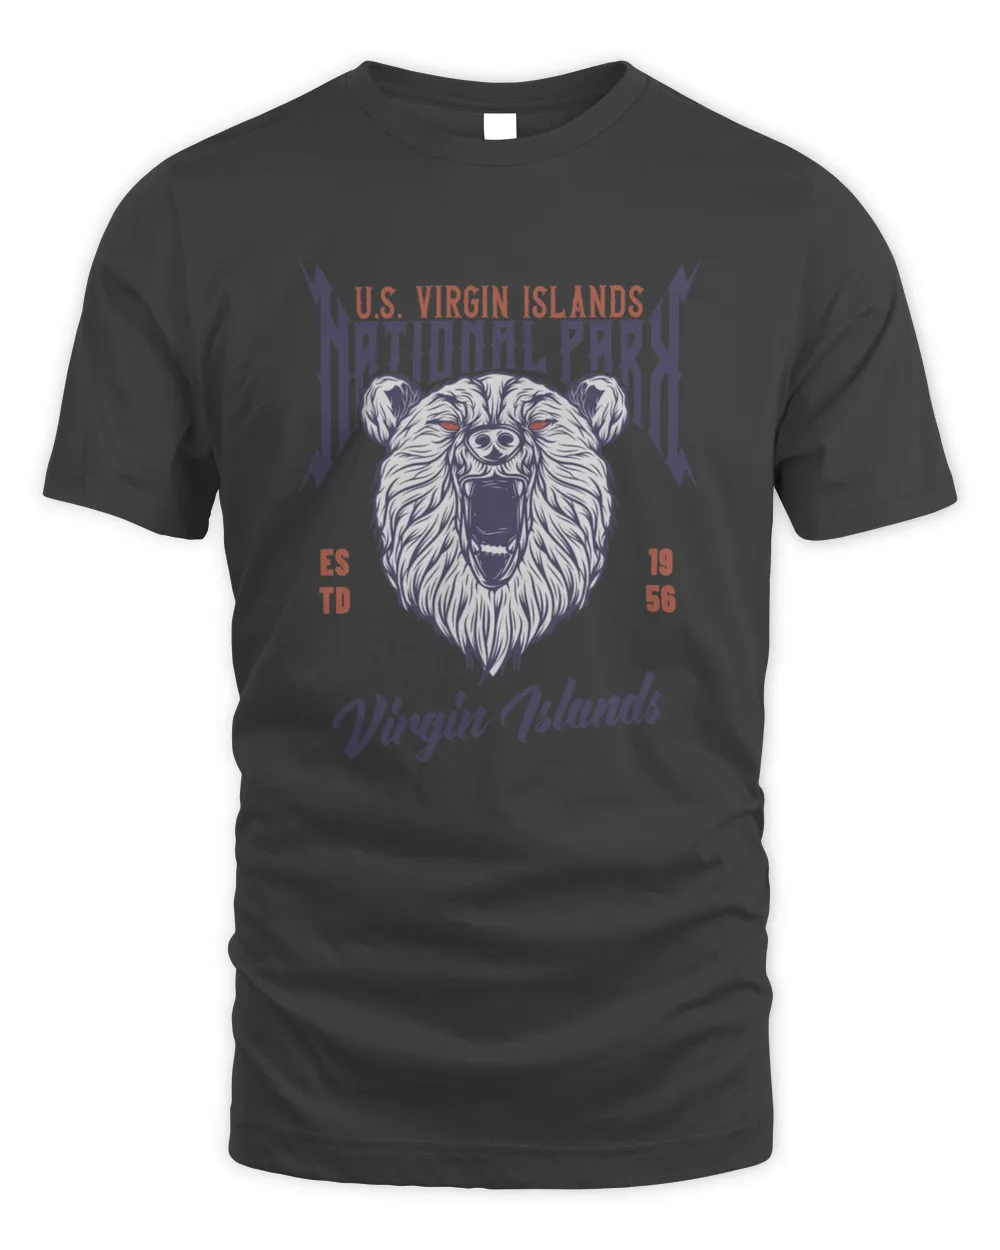 Vintage Virgin Islands National Park Virgin Island1232 T-Shirt